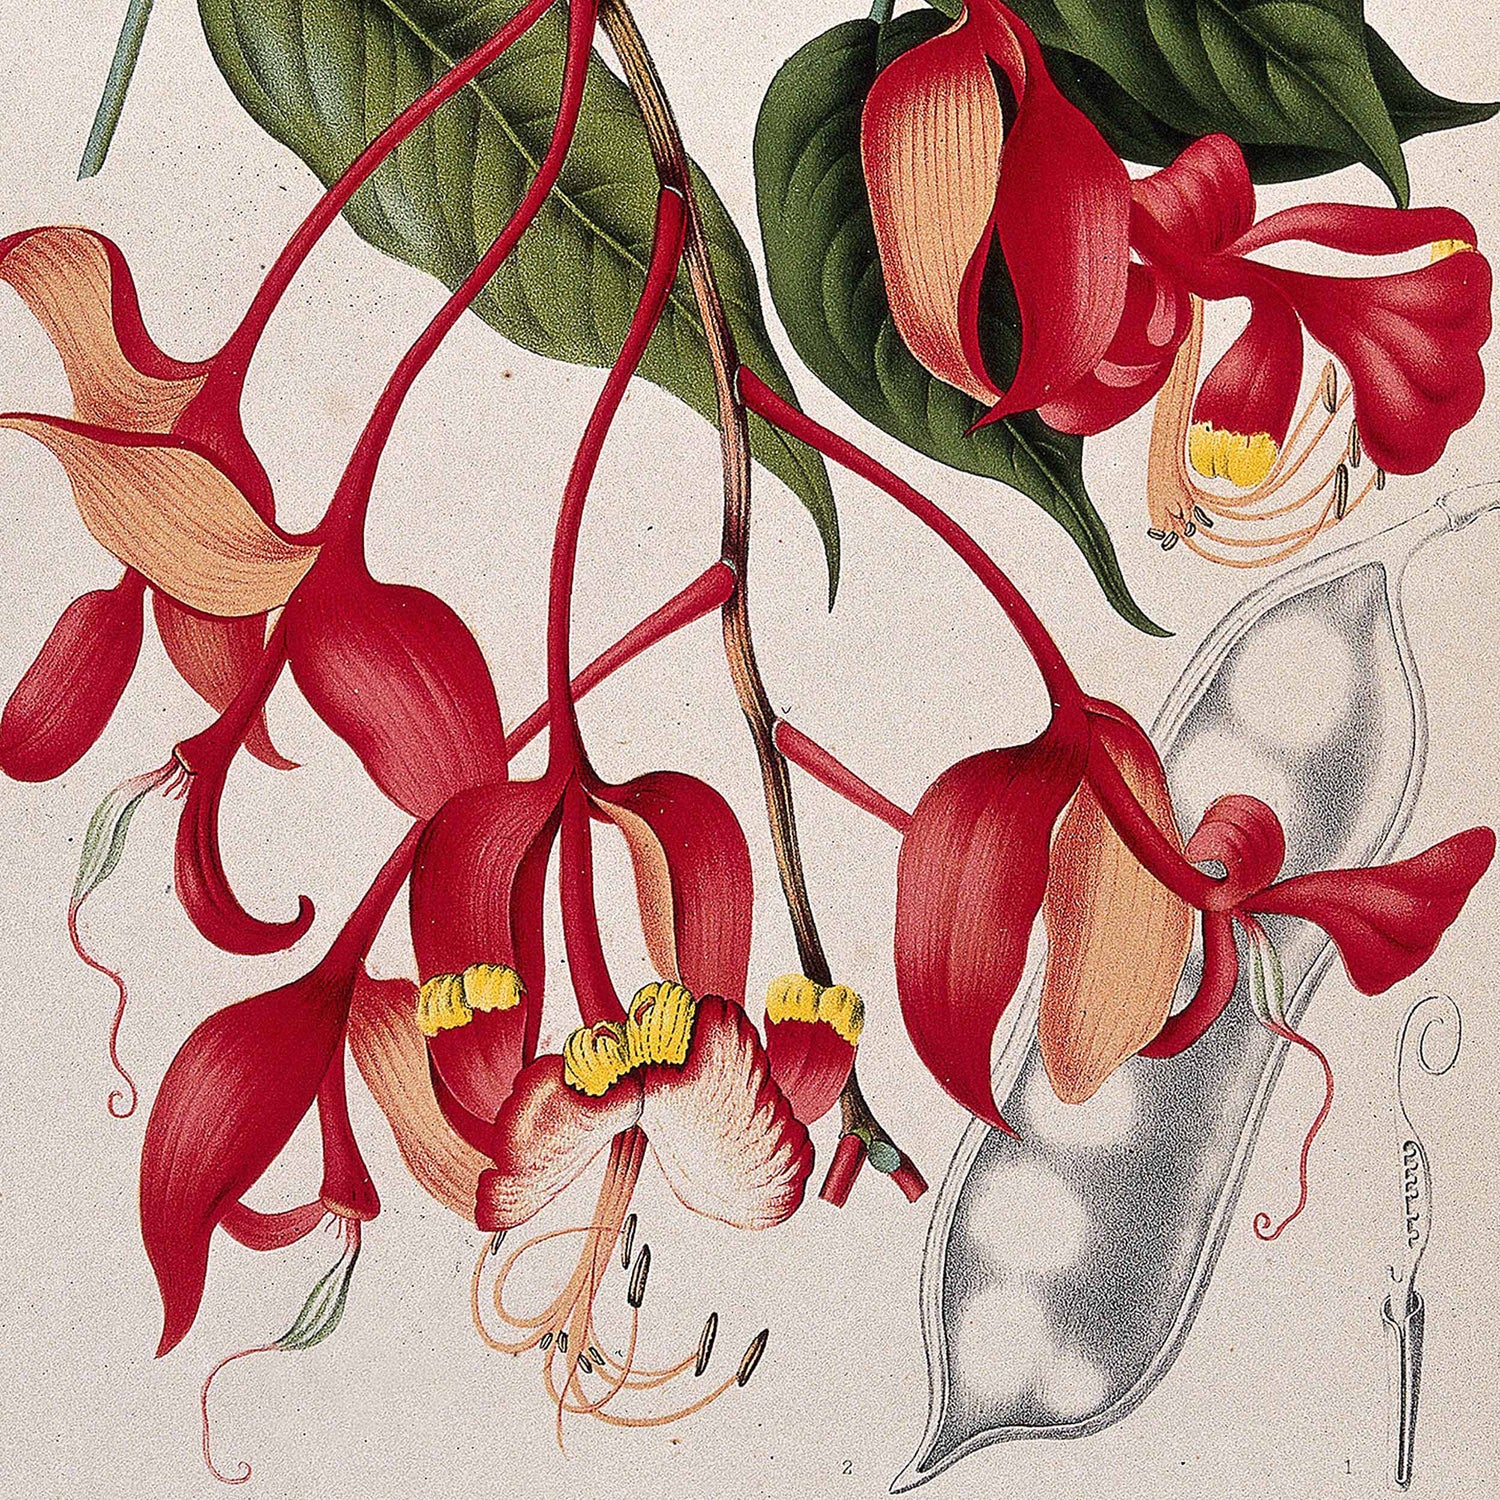 Berthe Hoola Van Nooten: Discover Her Stunning Botanical Illustrations